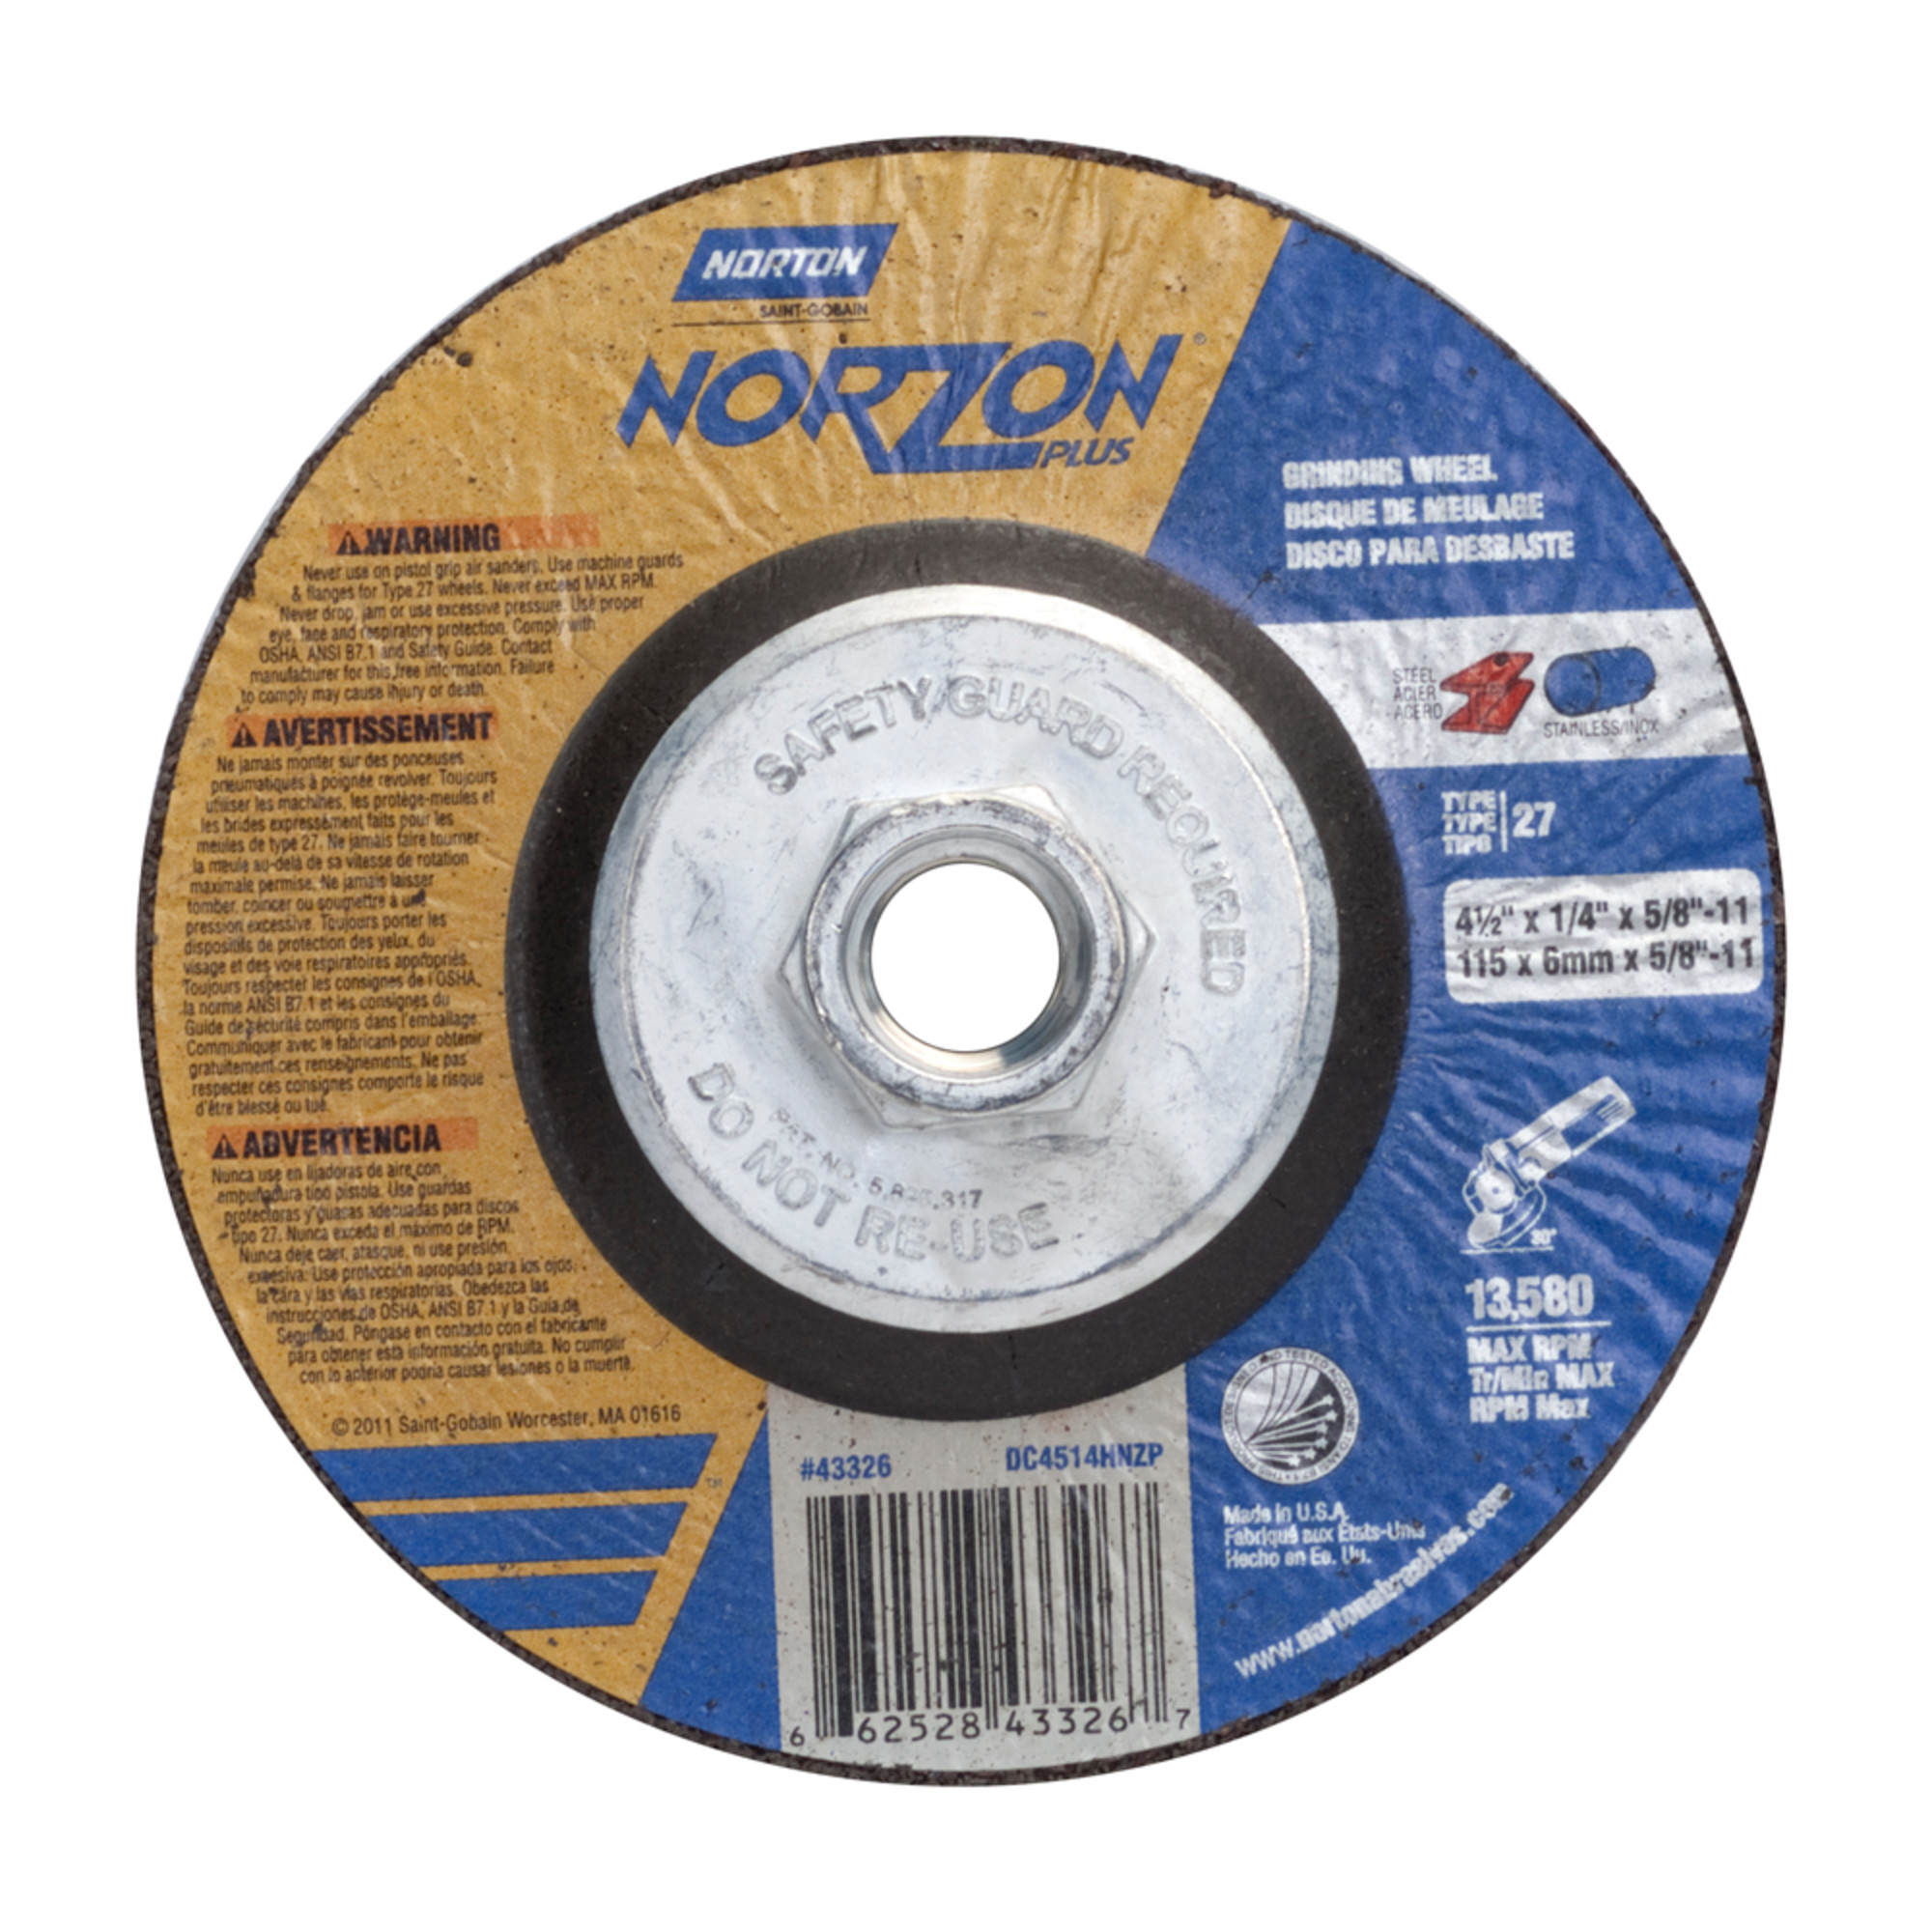 Norton Abrasives 4-1/2 x 1/4 x 5/8 - 11 In. Wheel